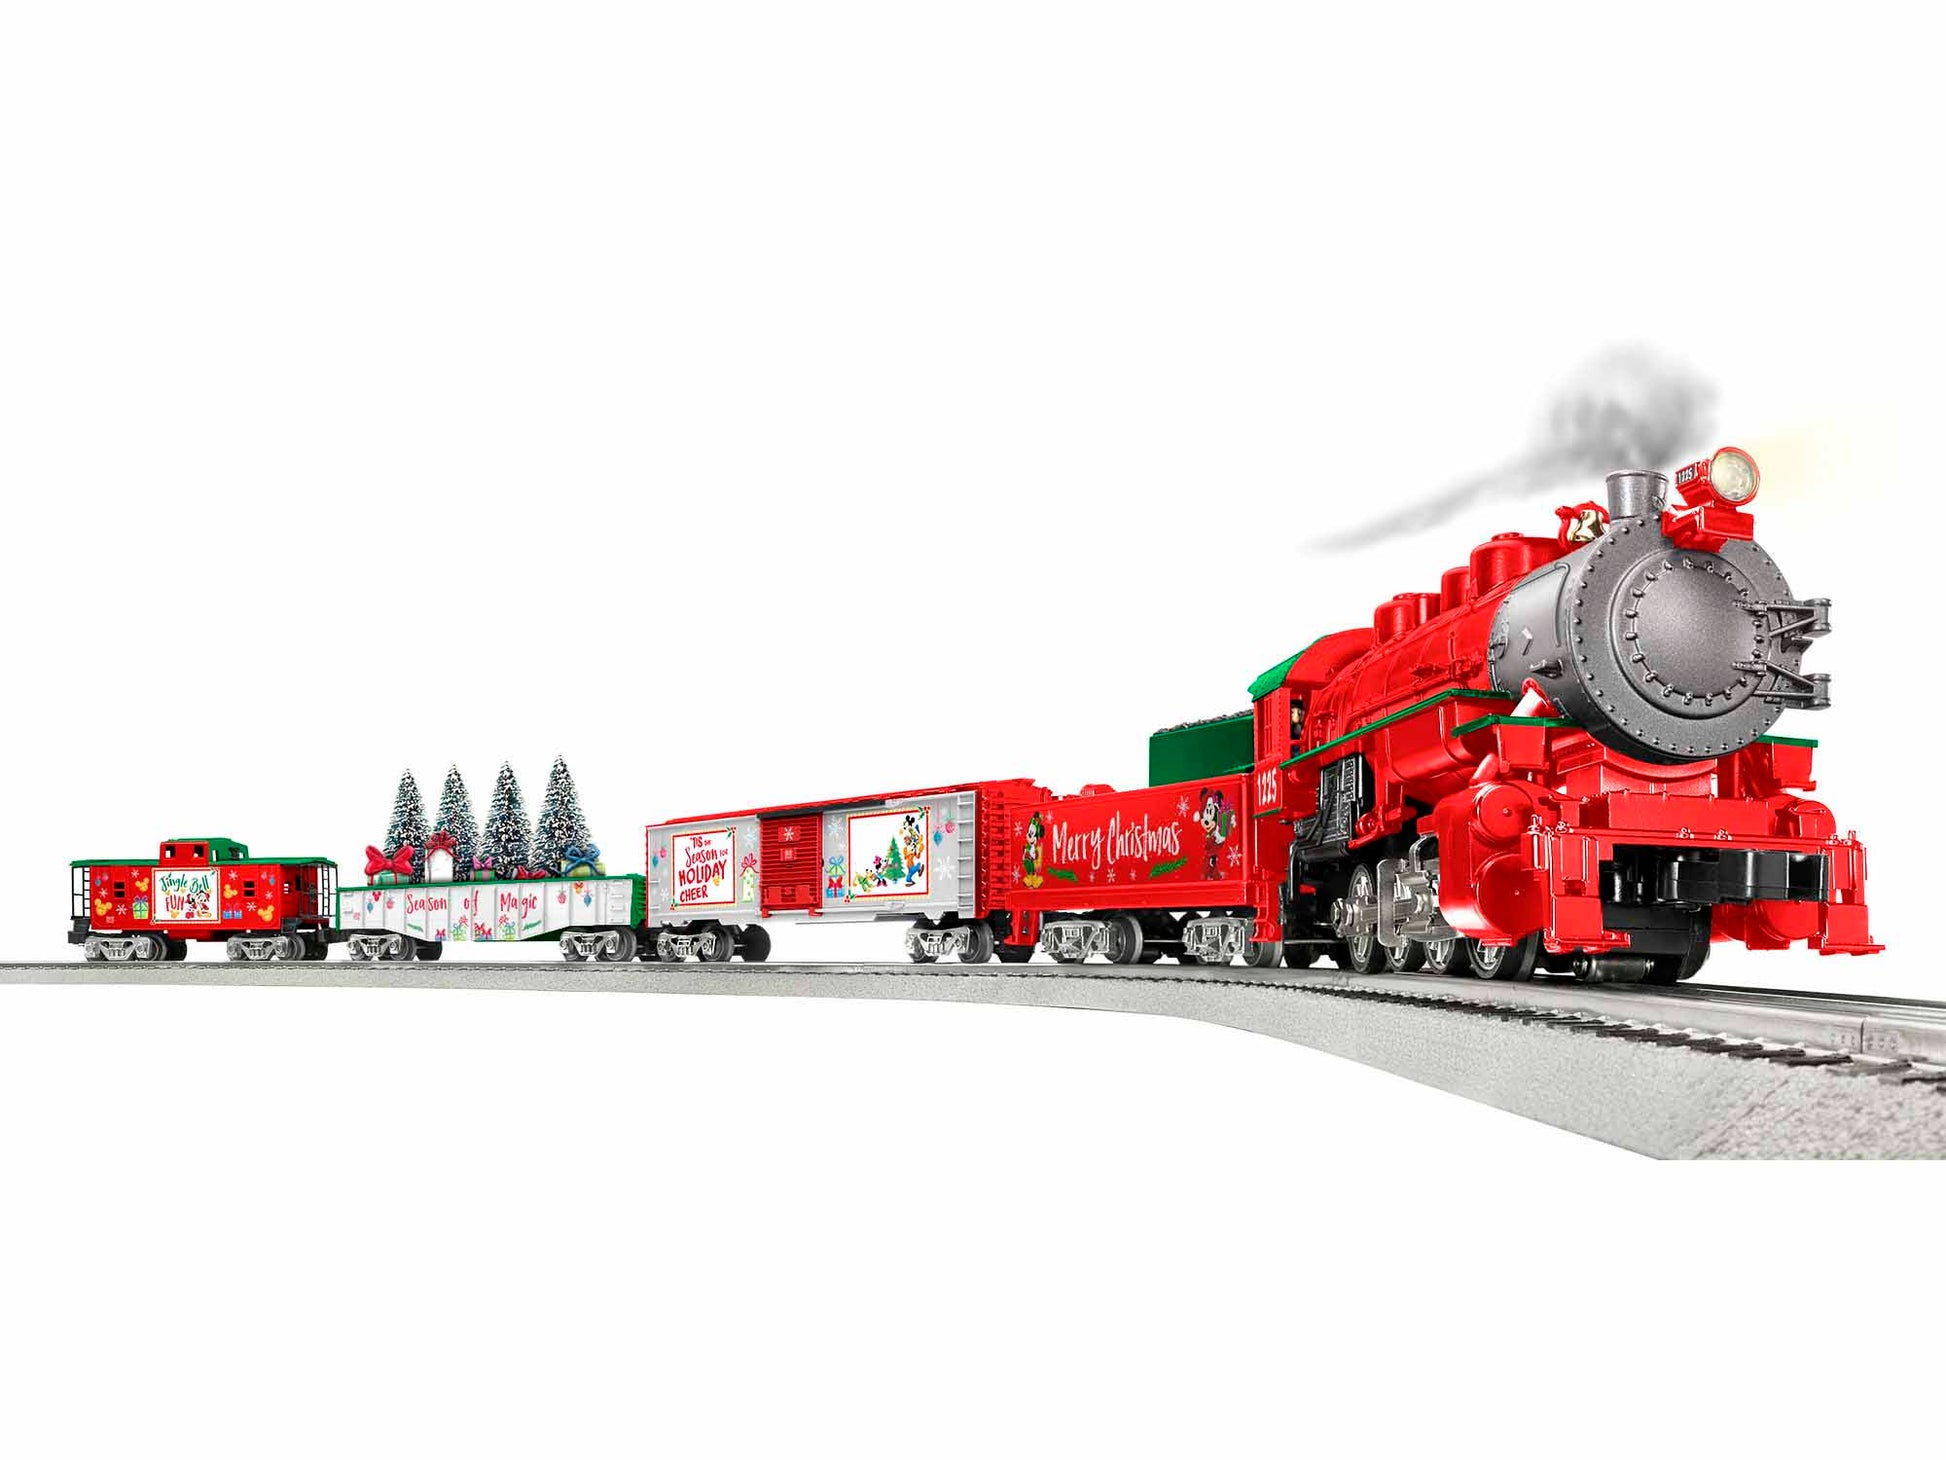 Lionel model train set Disney Christmas LionChief Set. O Scale.